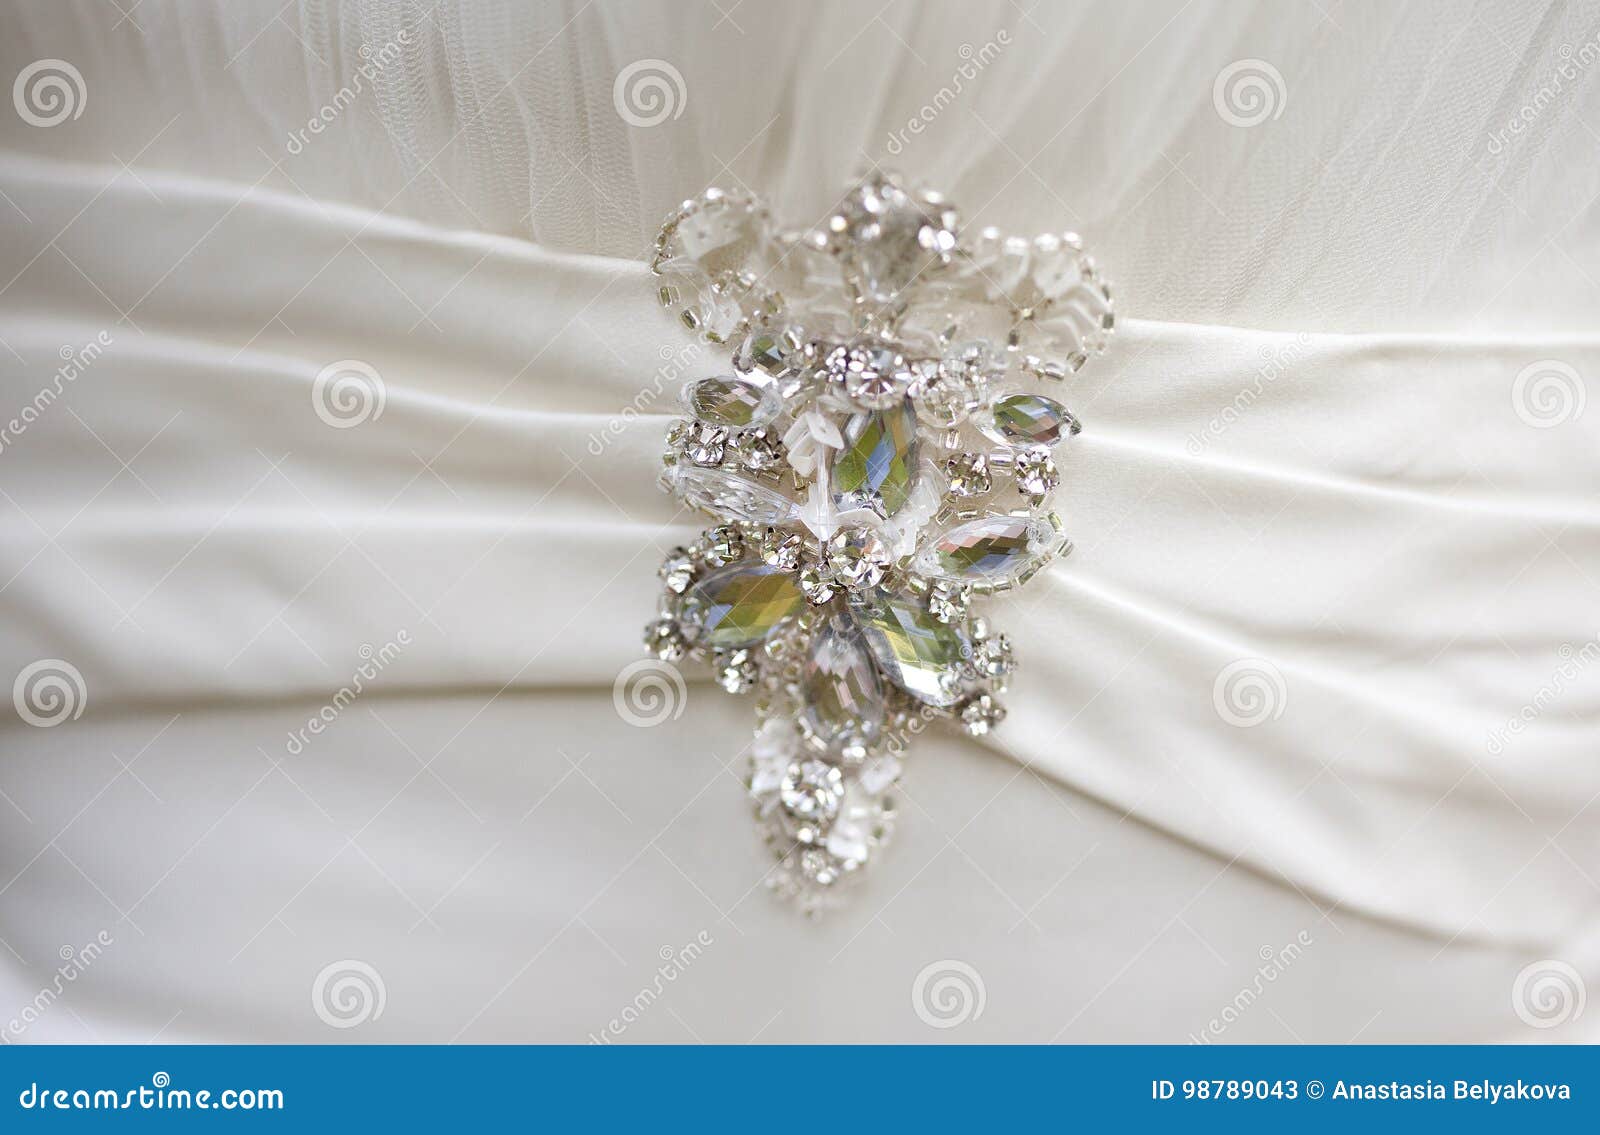 Silver Brooch with Big Rhinestones on White Silk Dress Stock Image ...